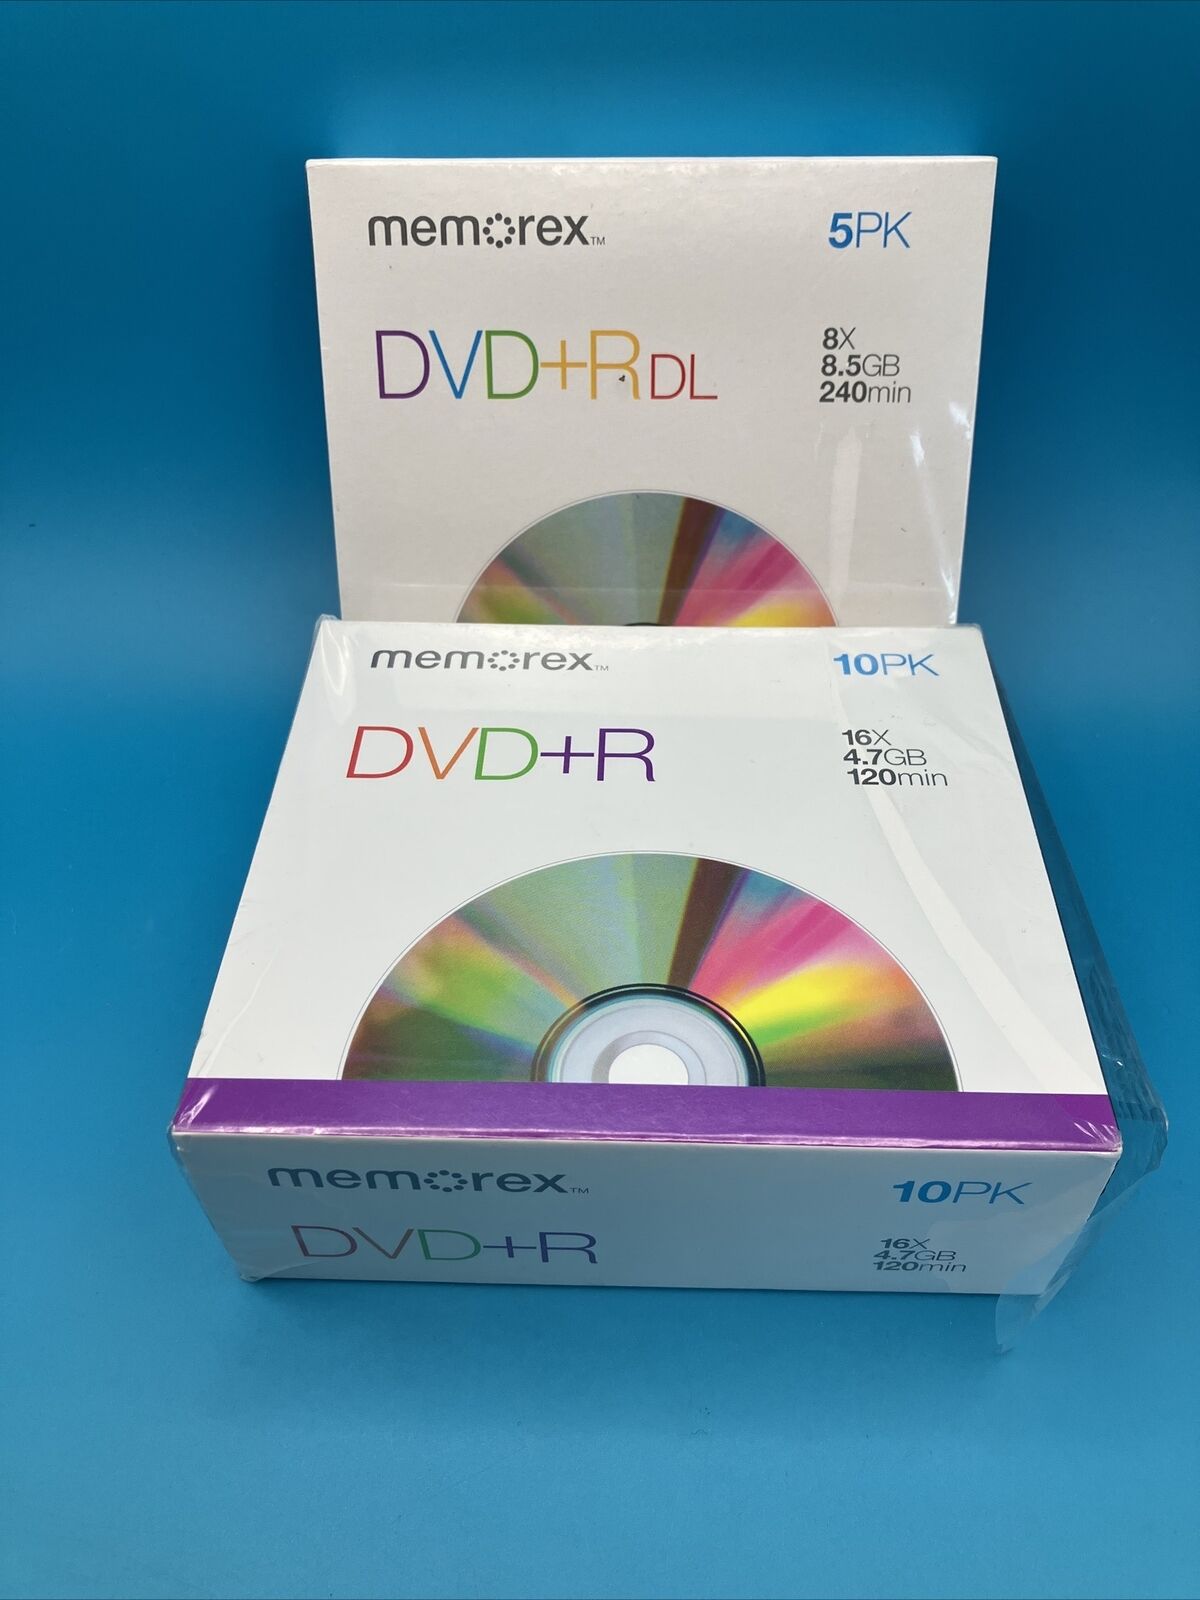 NEW- Memorex Dual Layer DVD+R  15 Pack 8X/8.5GB/Go/240min SEALED